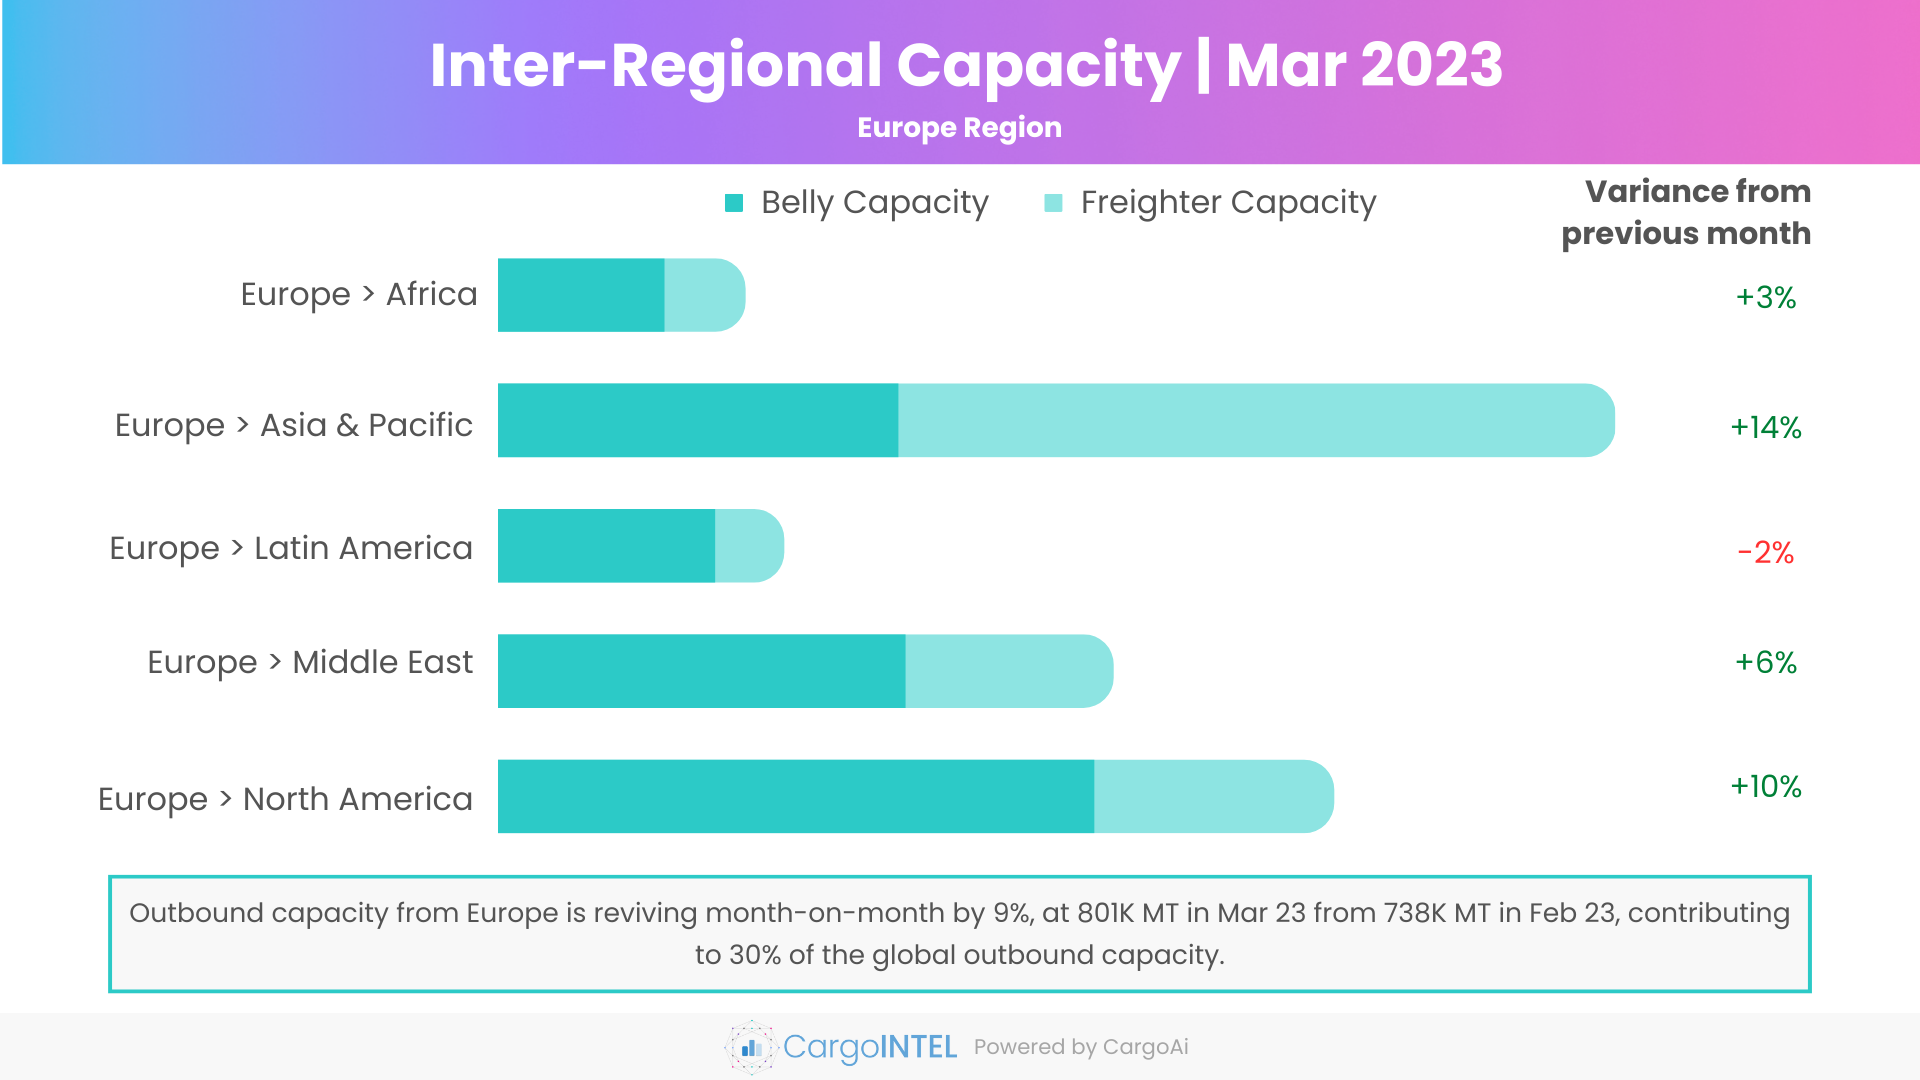 Air cargo capacity of Europe region of Mar 2023